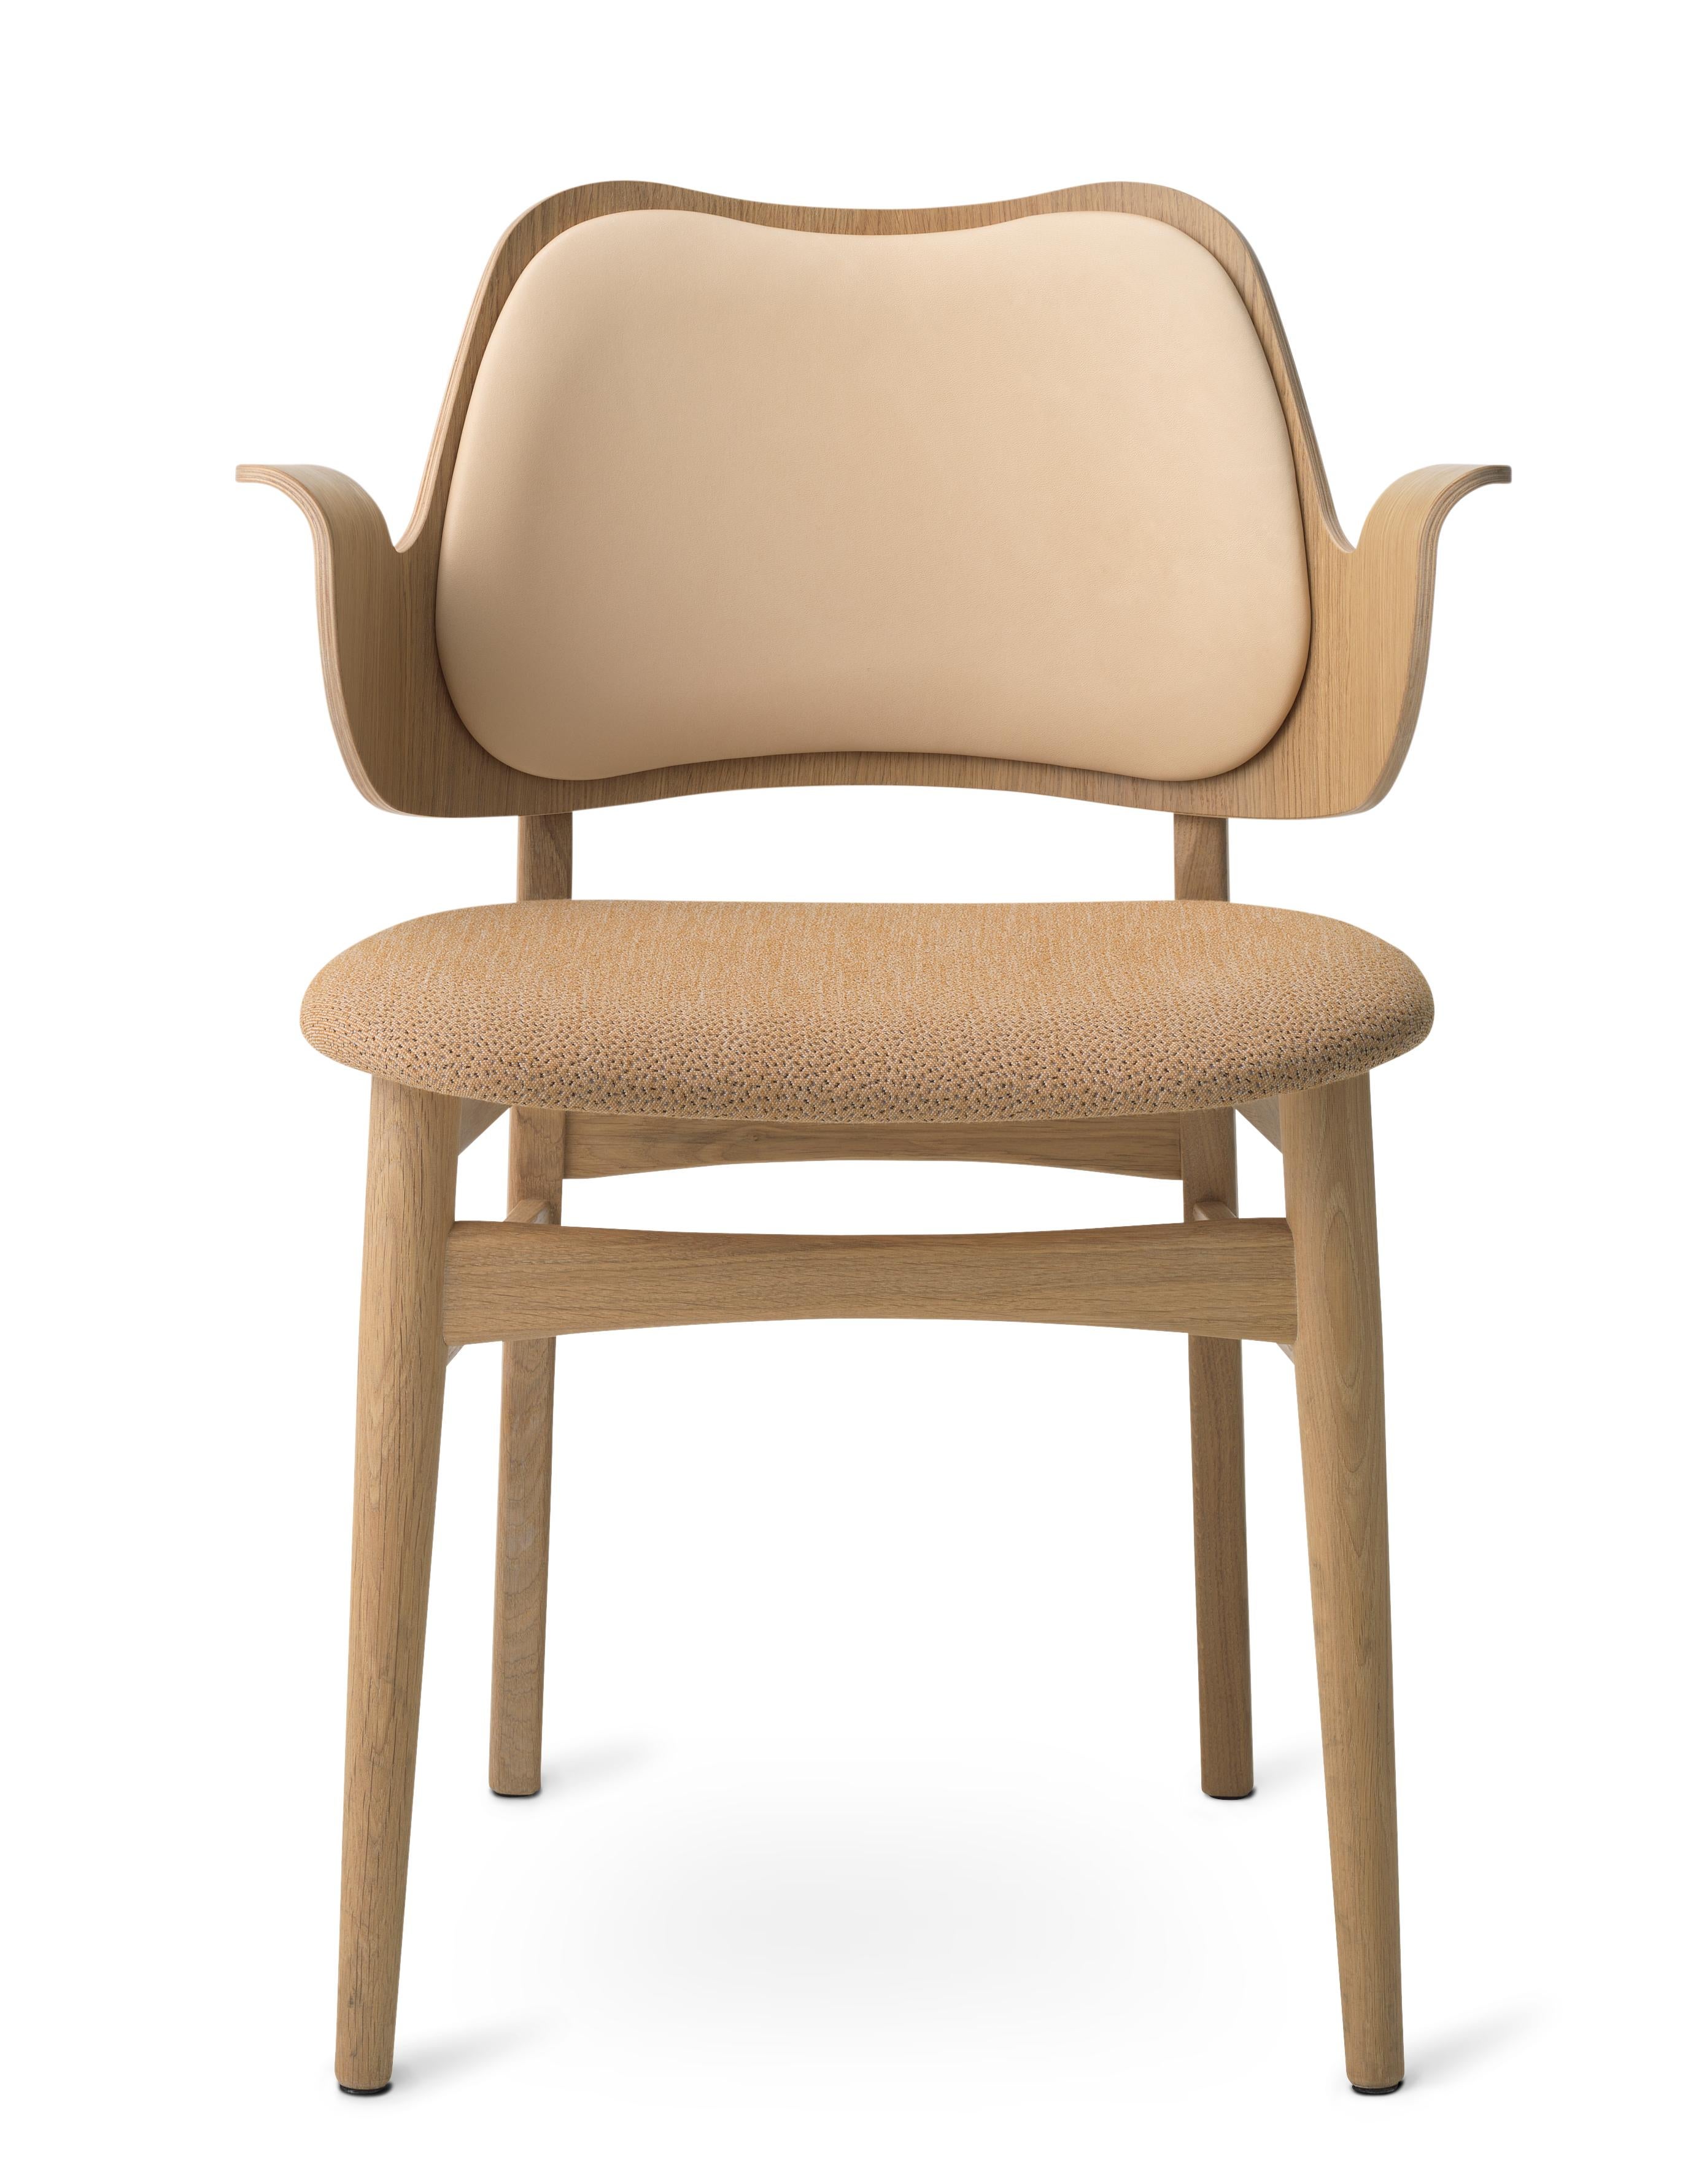 For Sale: Beige (Vegetal/Sprinkles 254) Gesture Two-Tone Fully Upholstered Chair in Oak, by Hans Olsen from Warm Nordic